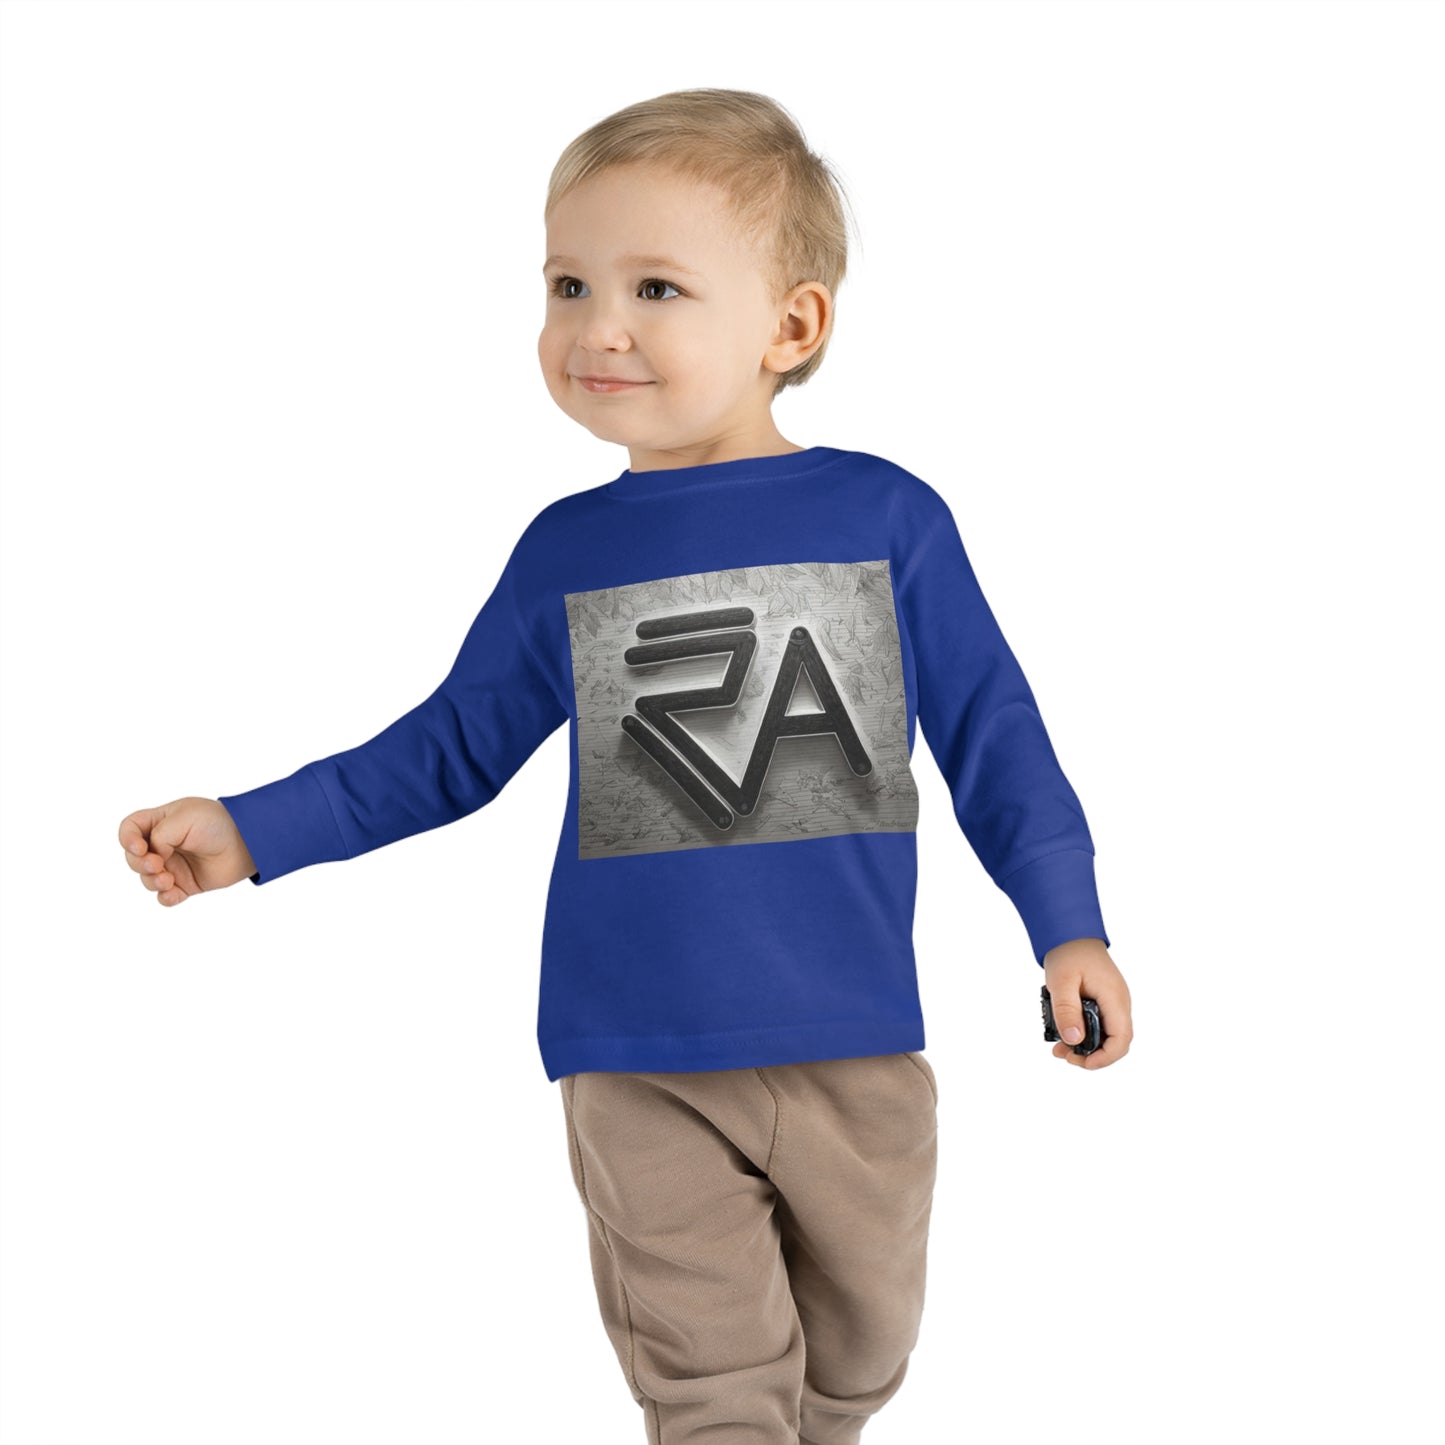 Futuristic RA - Toddler Long Sleeve Tee